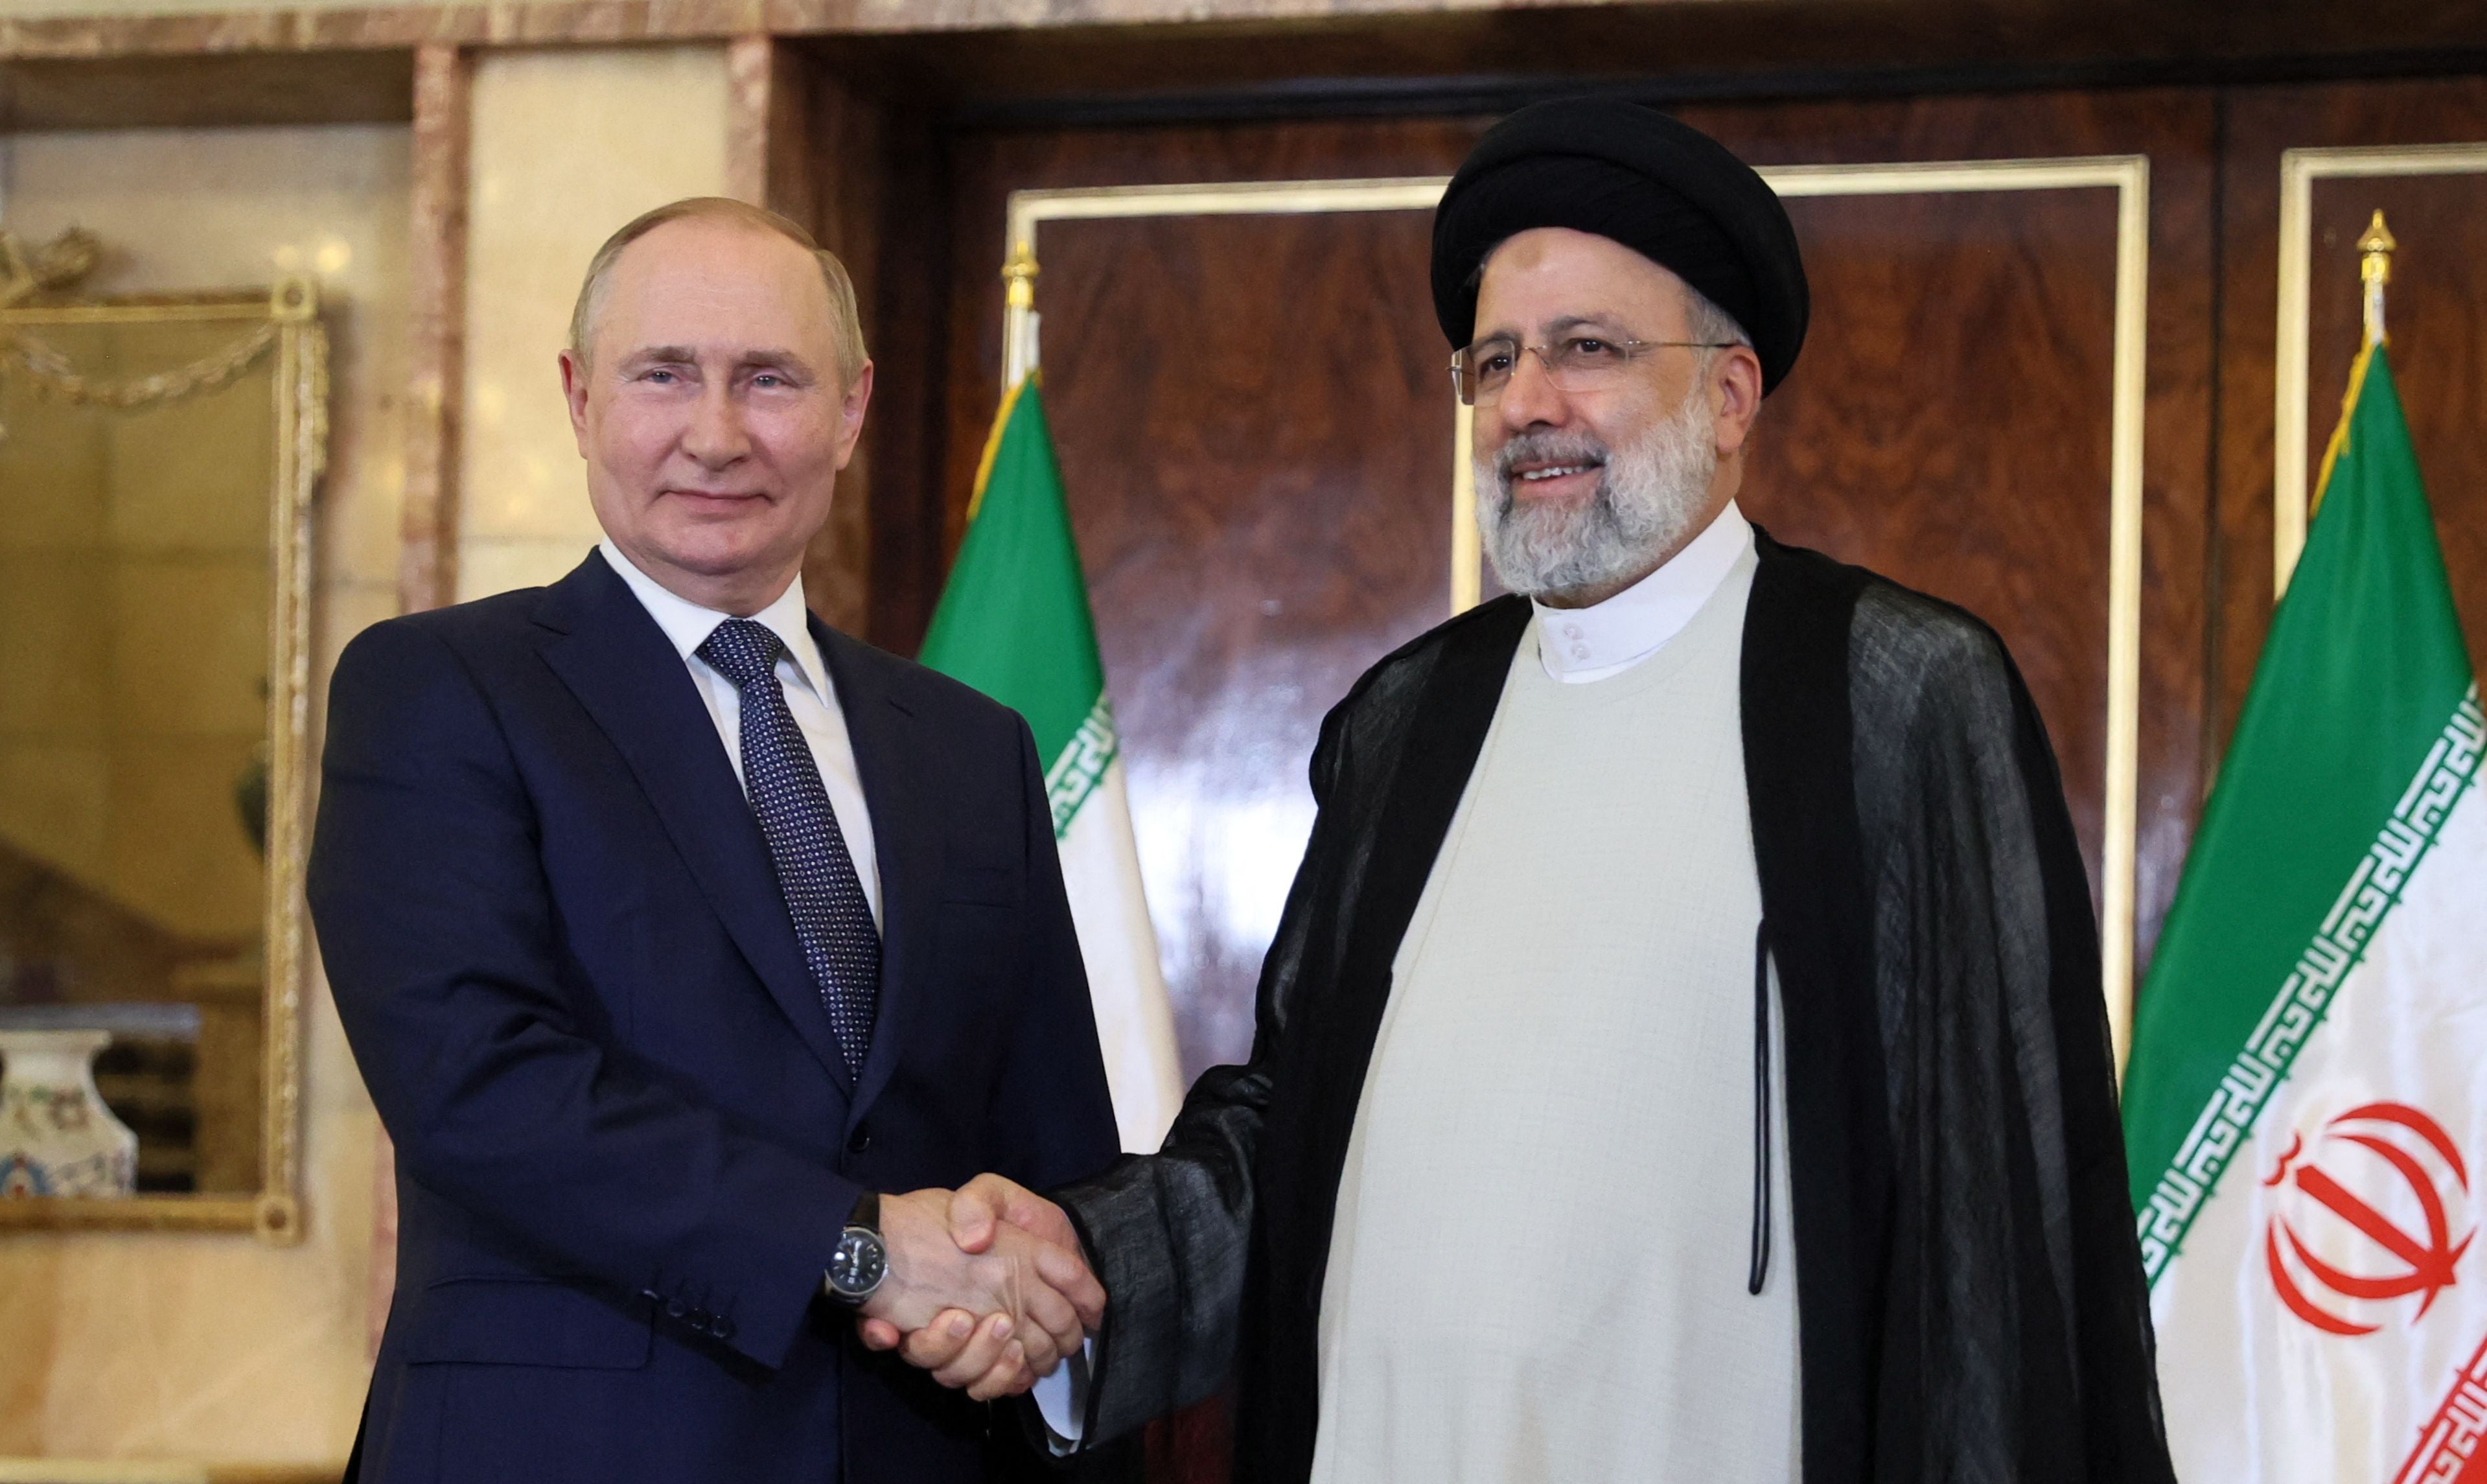 Russian President Vladimir Putin and Iran's President Ebrahim Raisi hold a meeting in Tehran on July 19, 2022